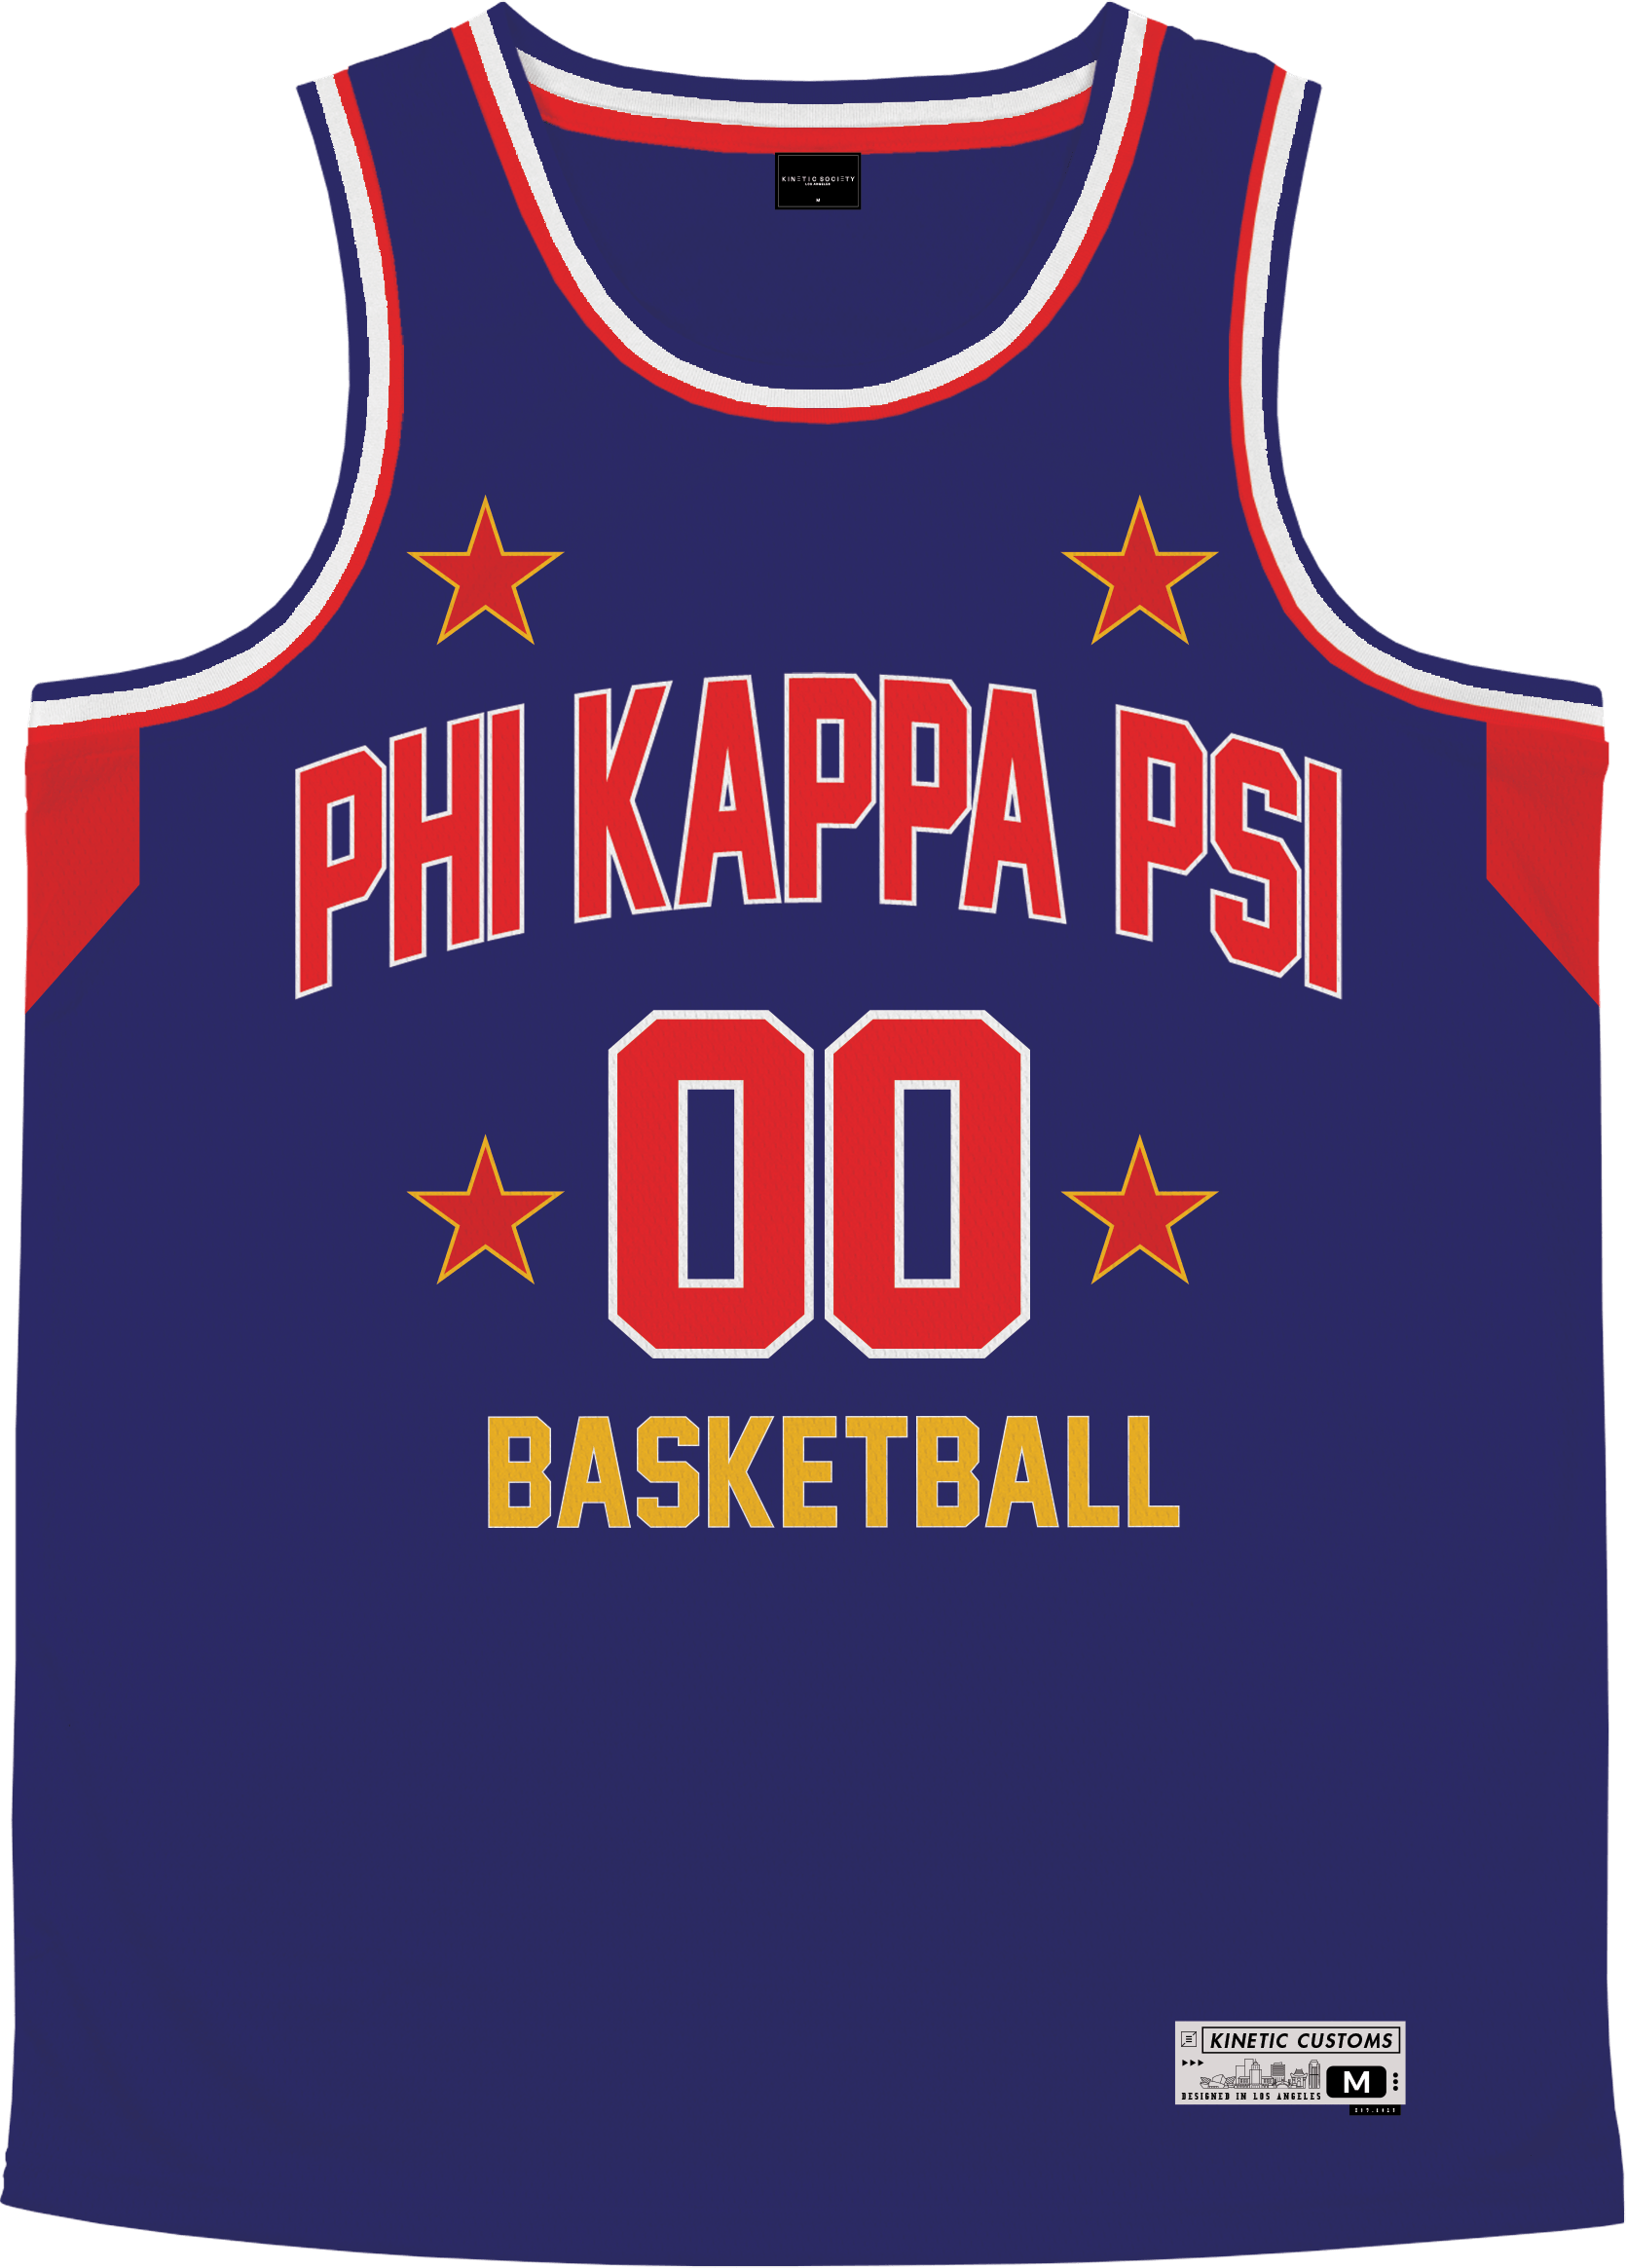 Phi Kappa Psi - Retro Ballers Basketball Jersey - Kinetic Society